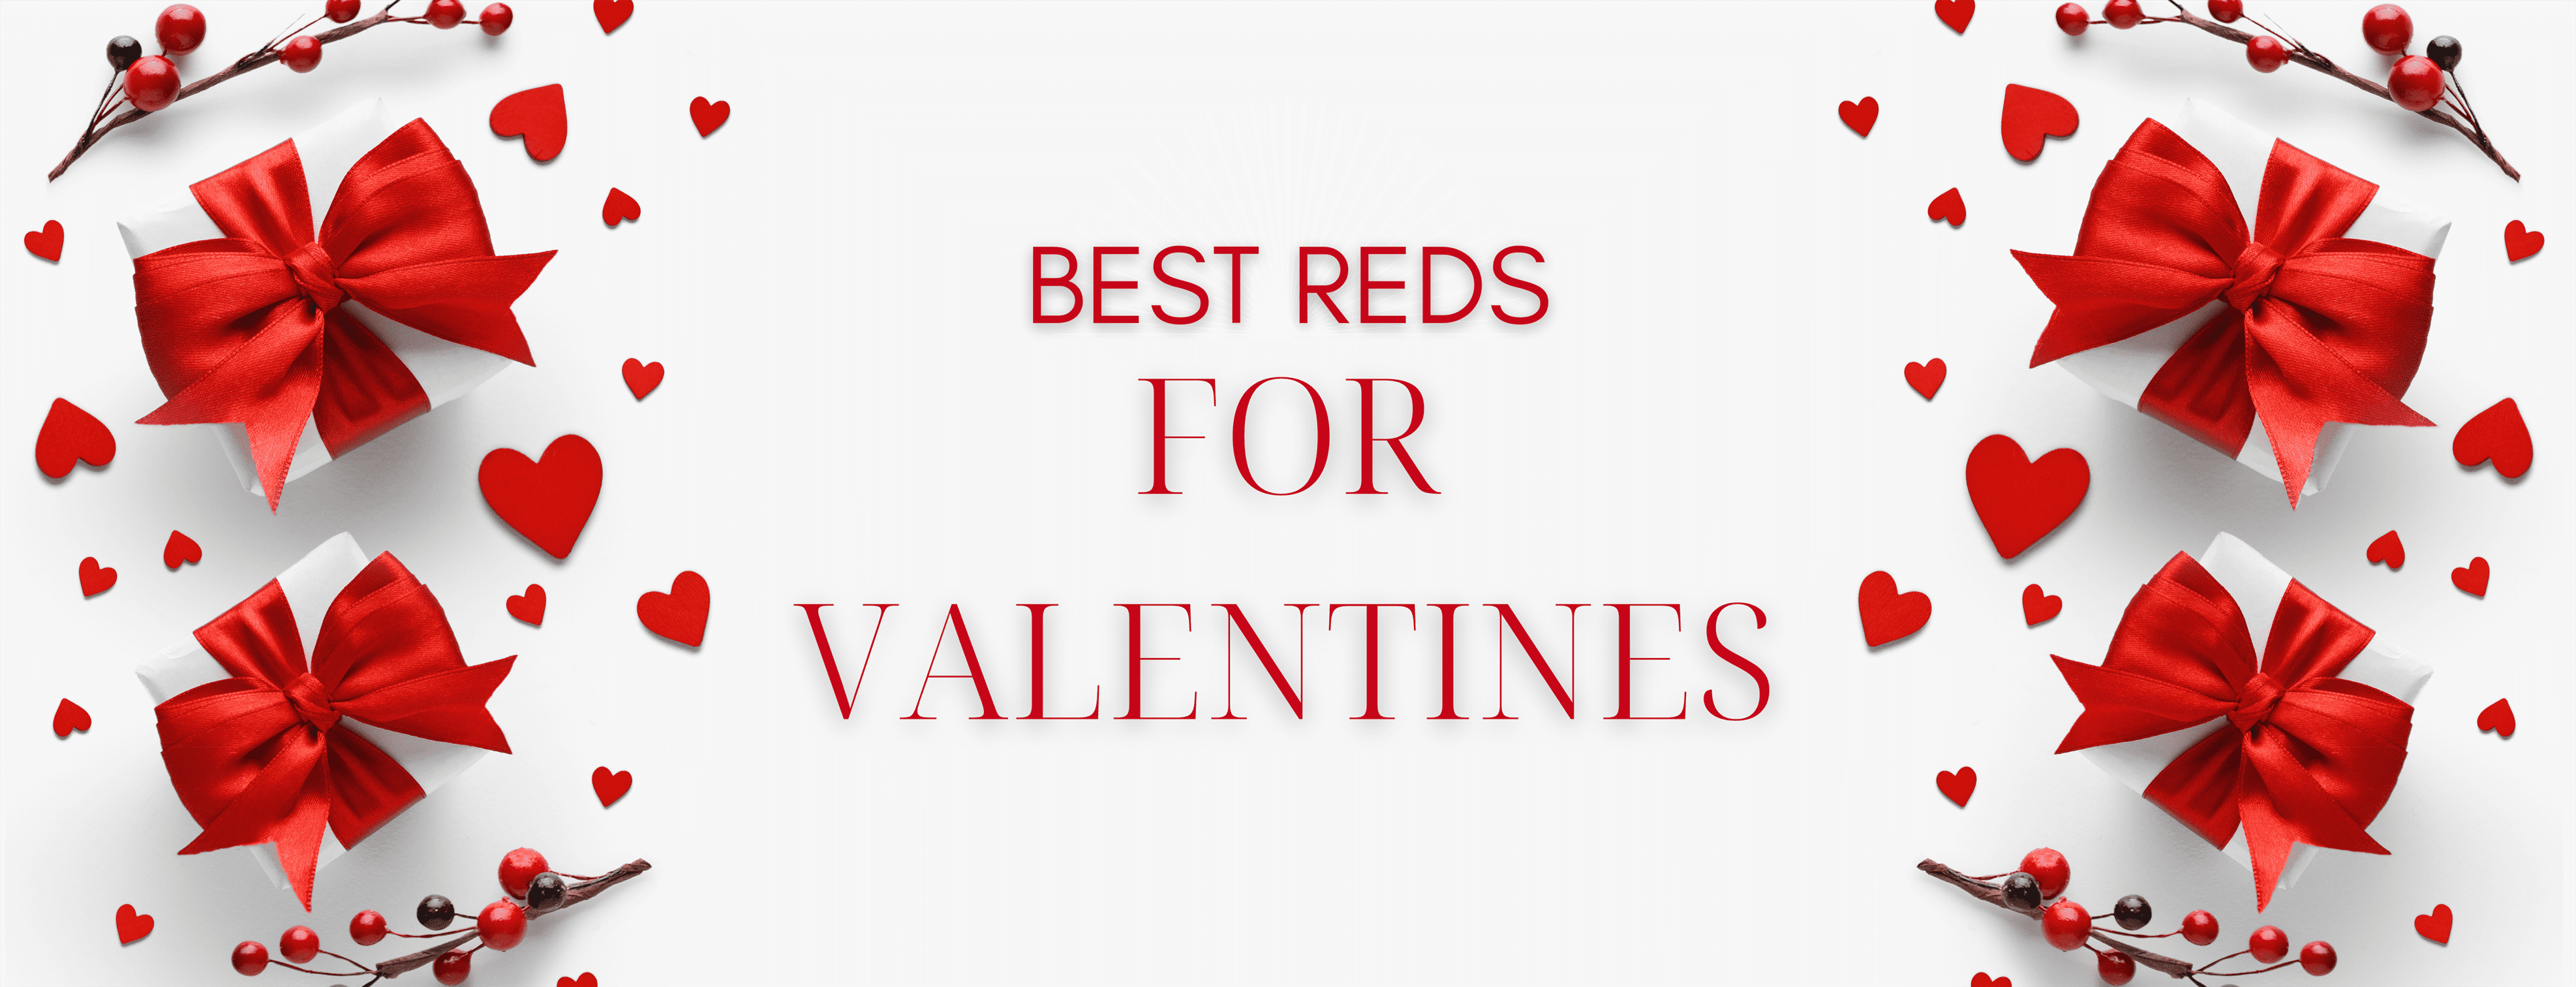 Best Red Fabrics for Valentine